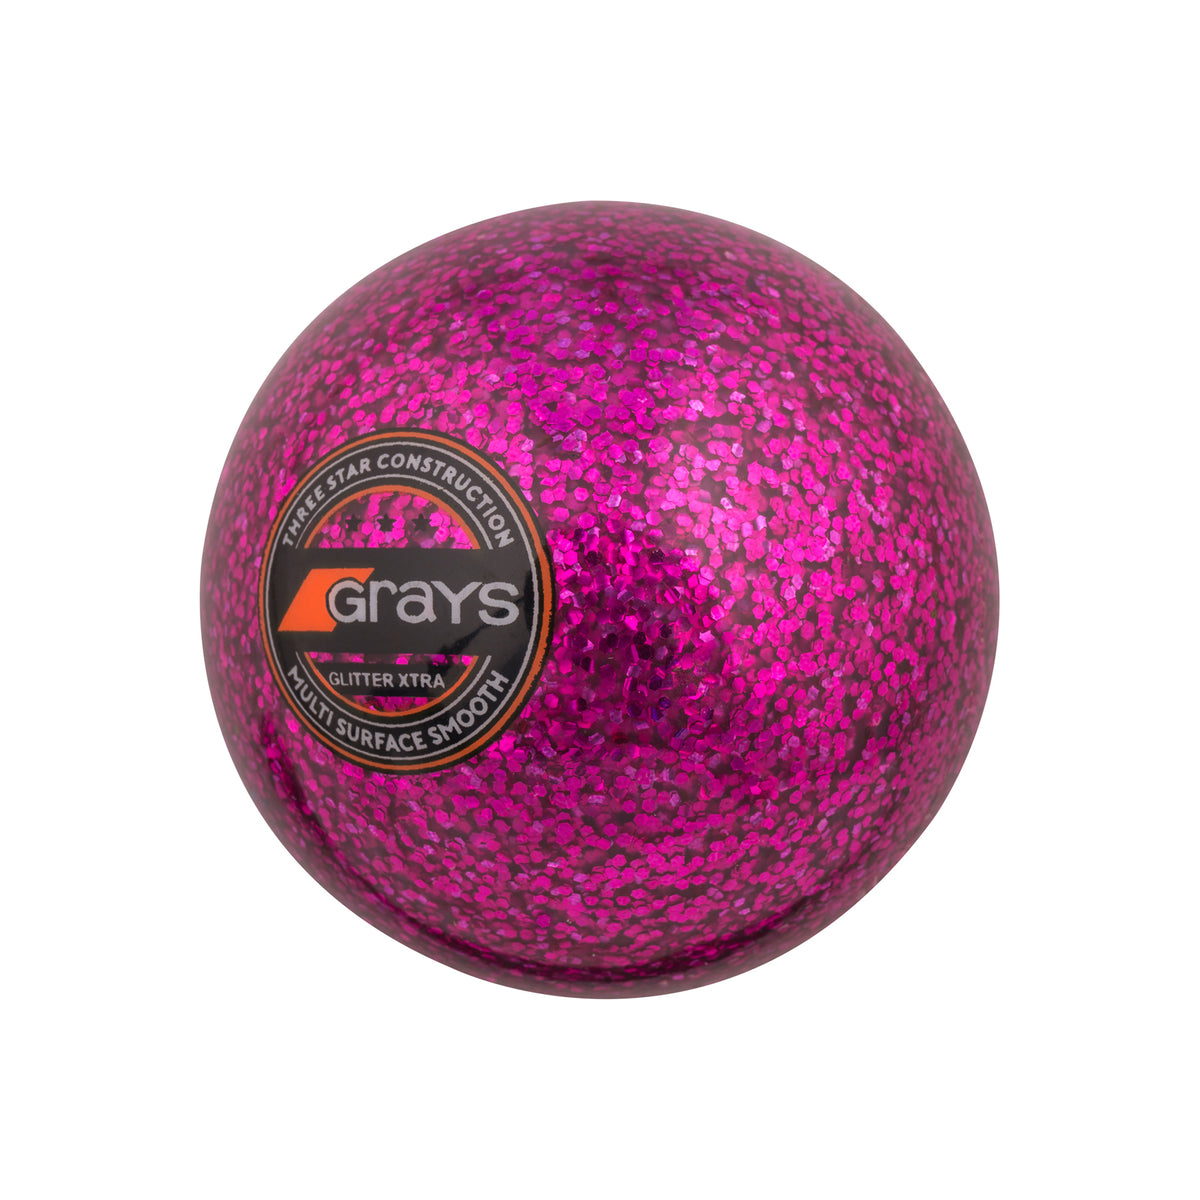 Grays Glitter Xtra Hockey Ball: Pink